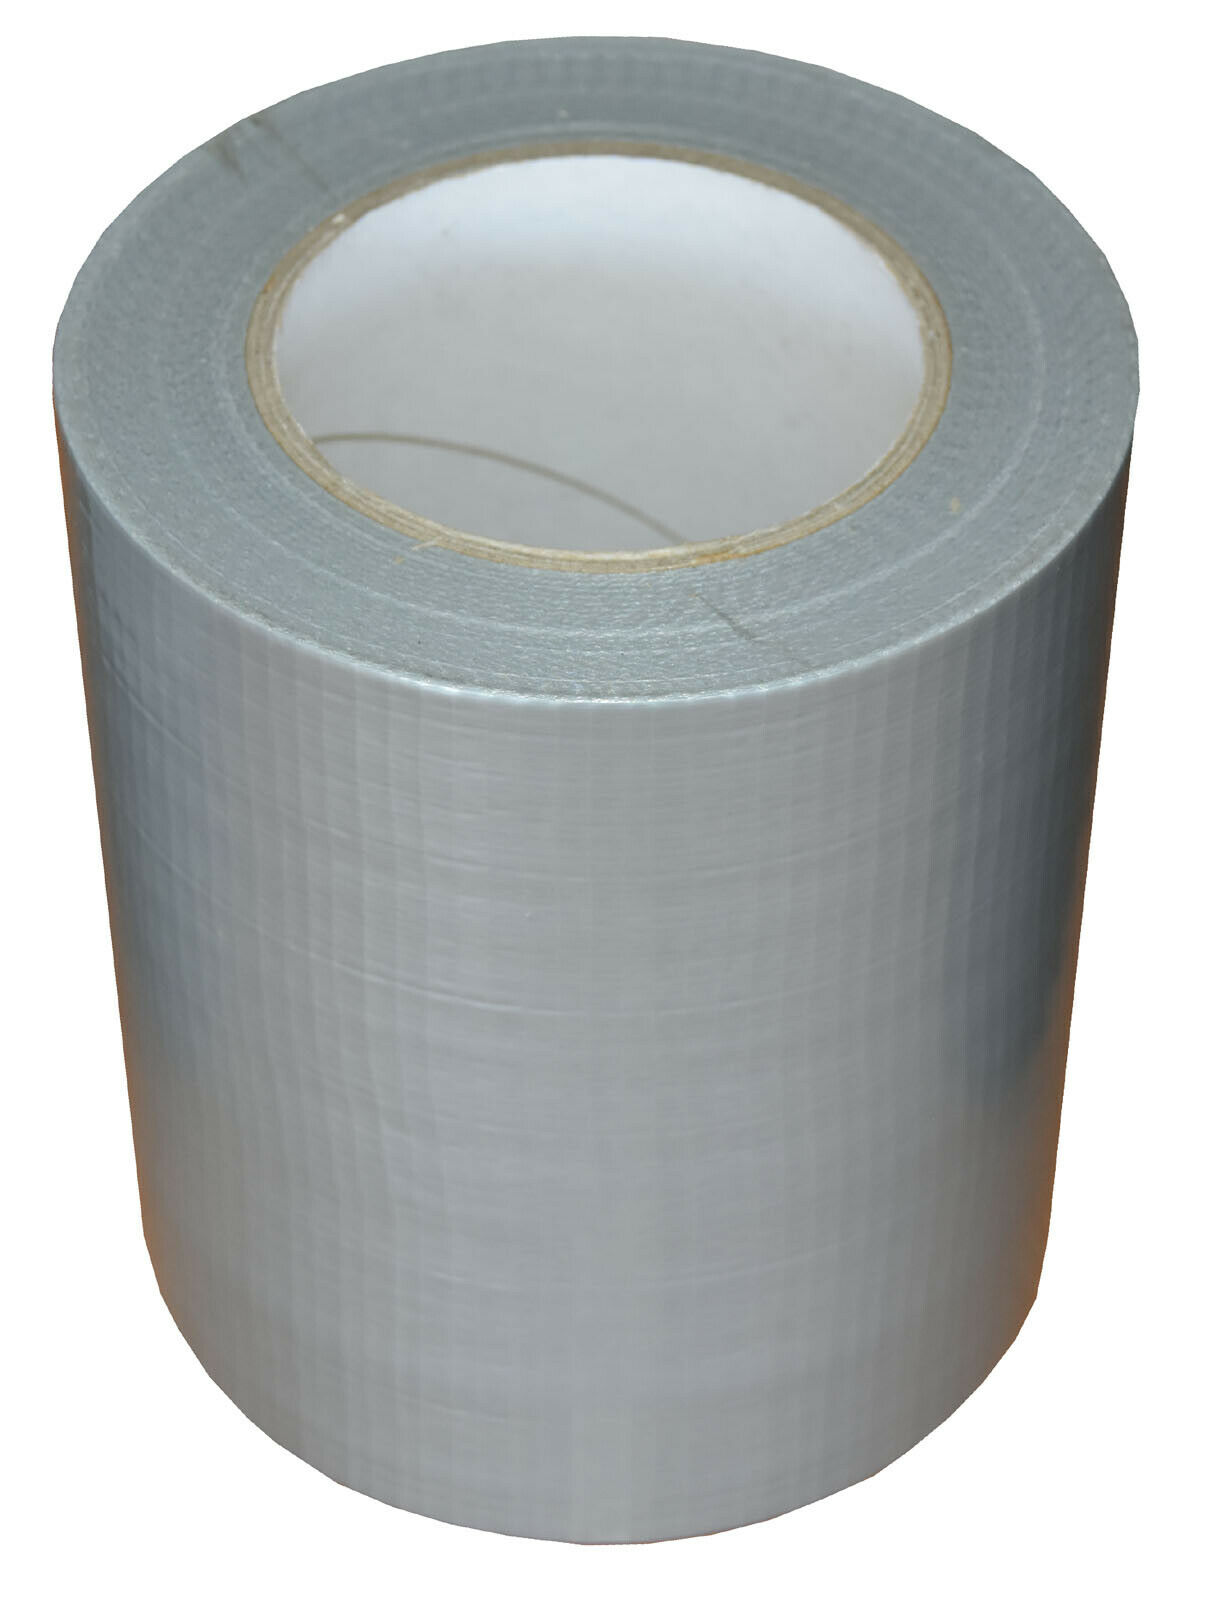 150mm x 50m Silver Gaffer Tape Waterproof Duct Tape Qty 1 Roll